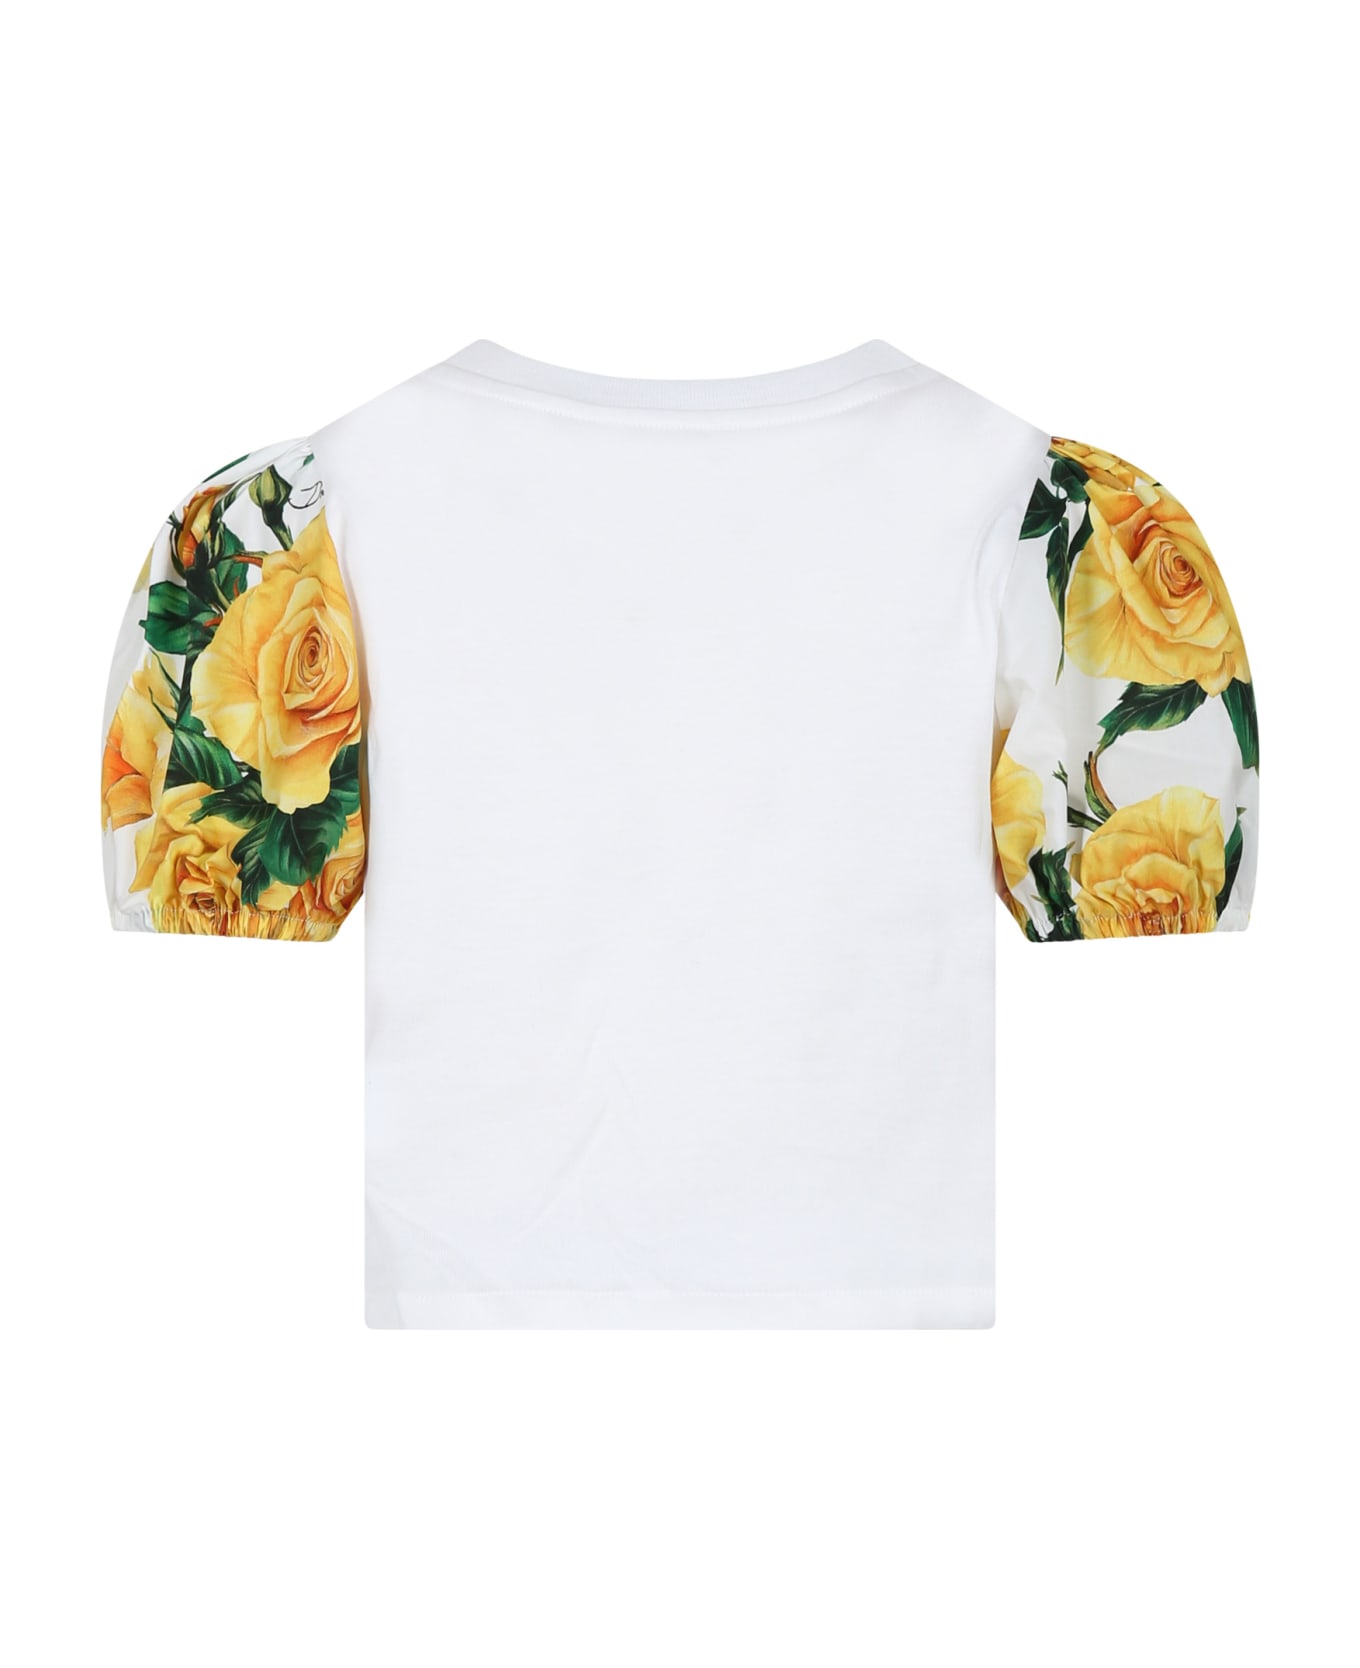 Dolce & Gabbana White T-shirt For Girl With Flowering Pattern - White